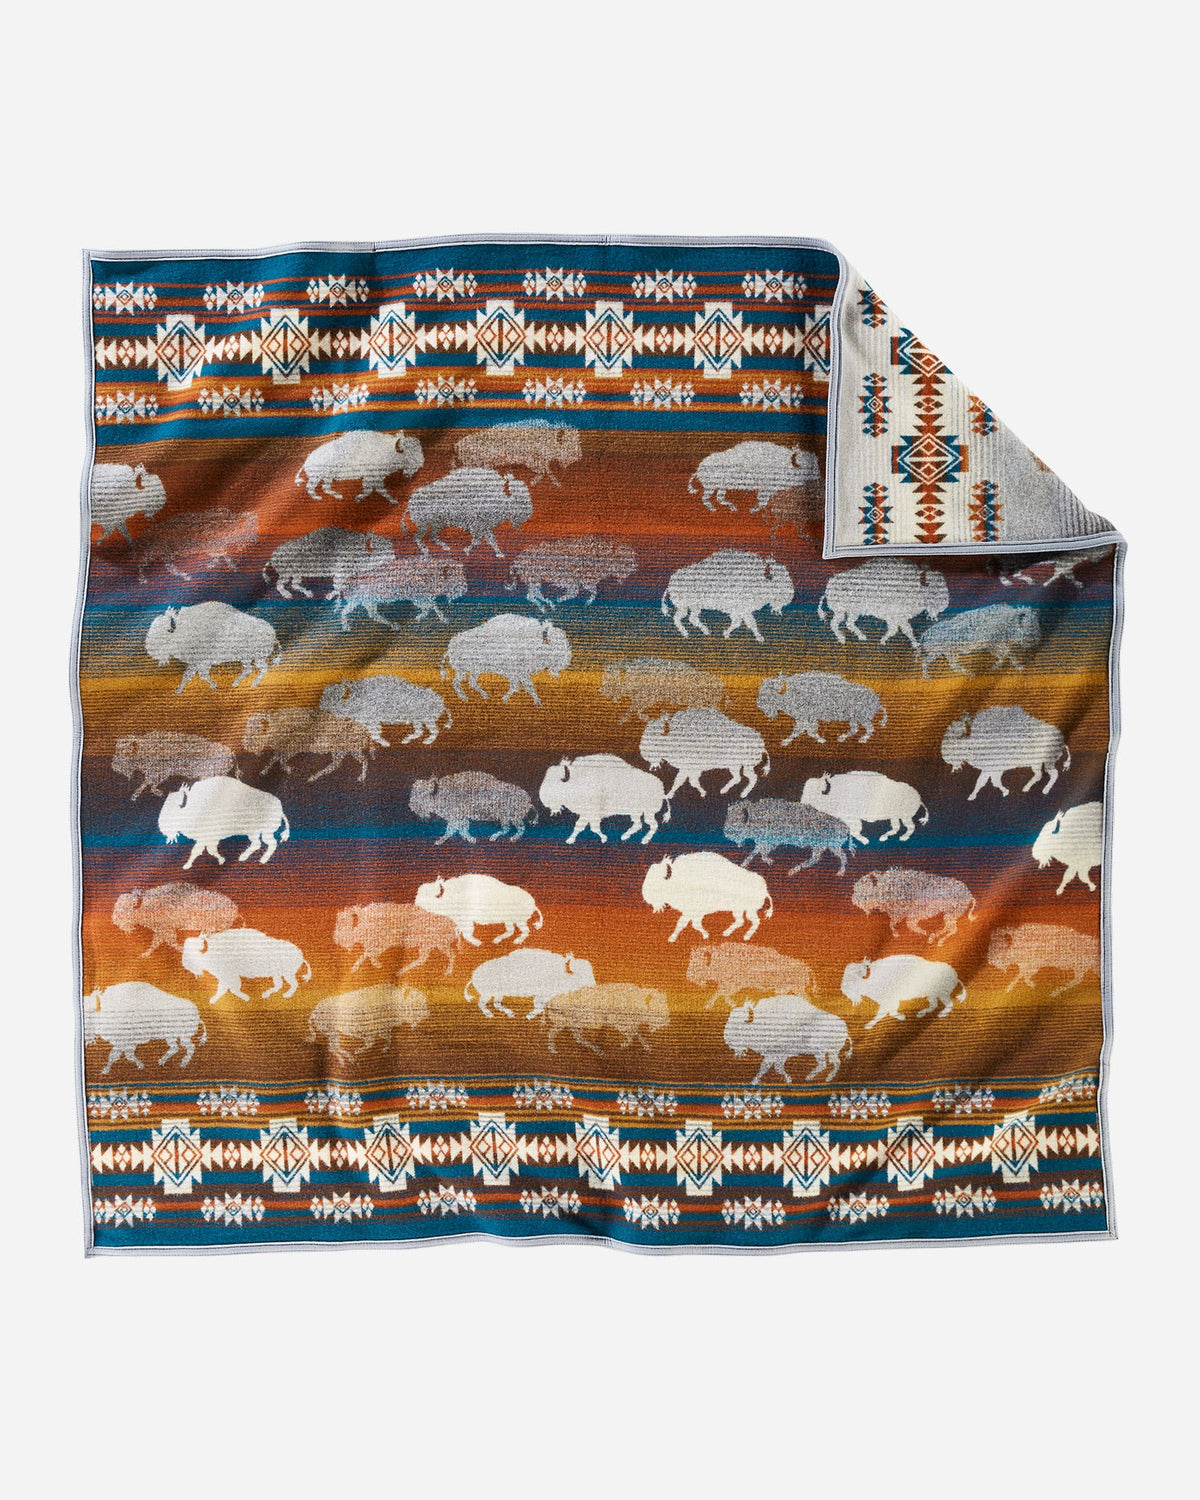 Bison Rush Hour Pendleton Throw Blanket made in Oregon, USA - Blue Mountain Brands USA Home Decor